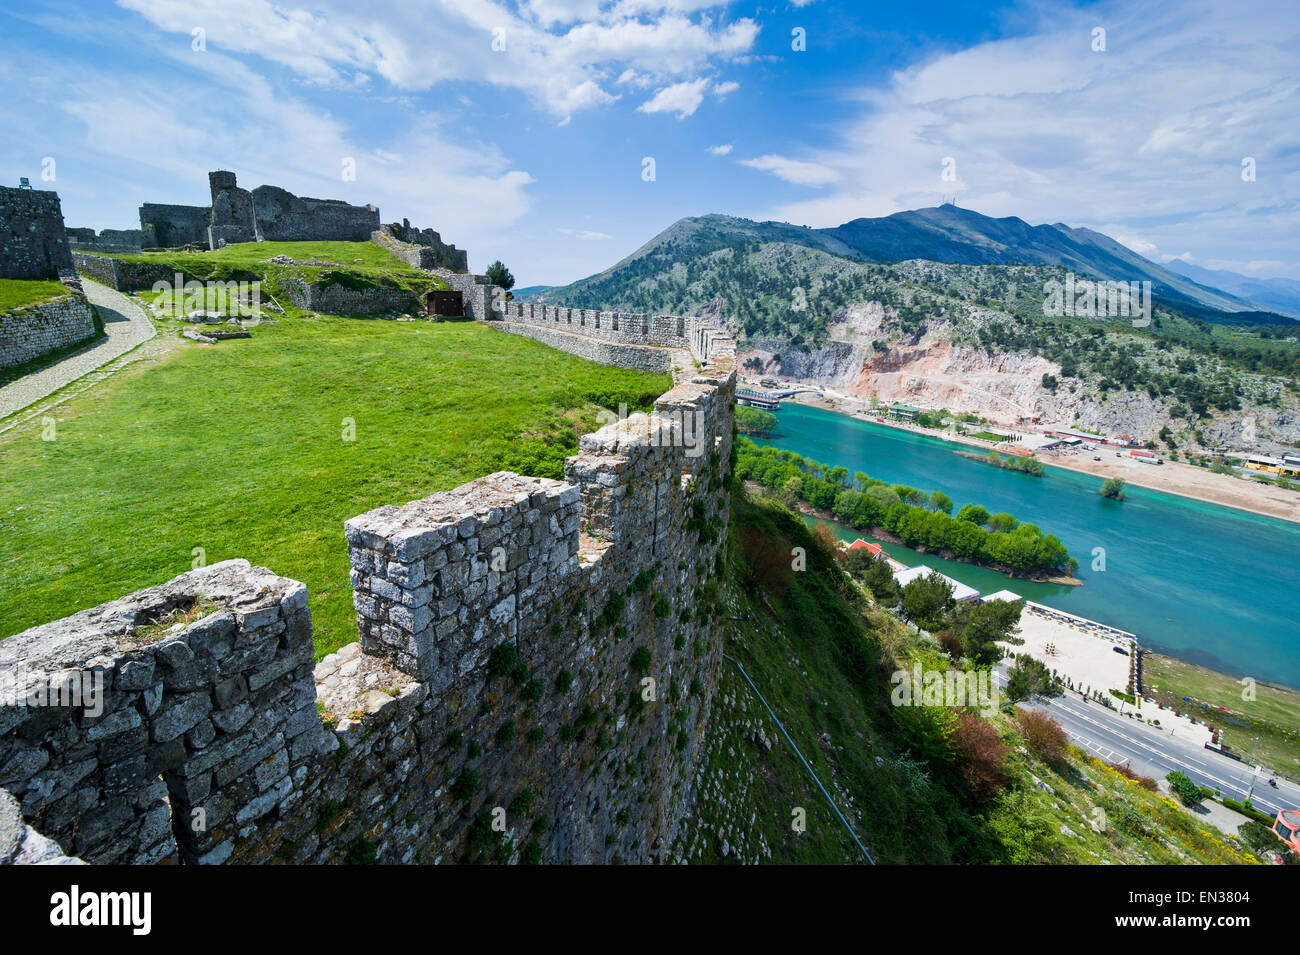 Vista sul fiume Buna, dal castello di Rozafa, Shkodër, Shkodra, Albania Foto Stock